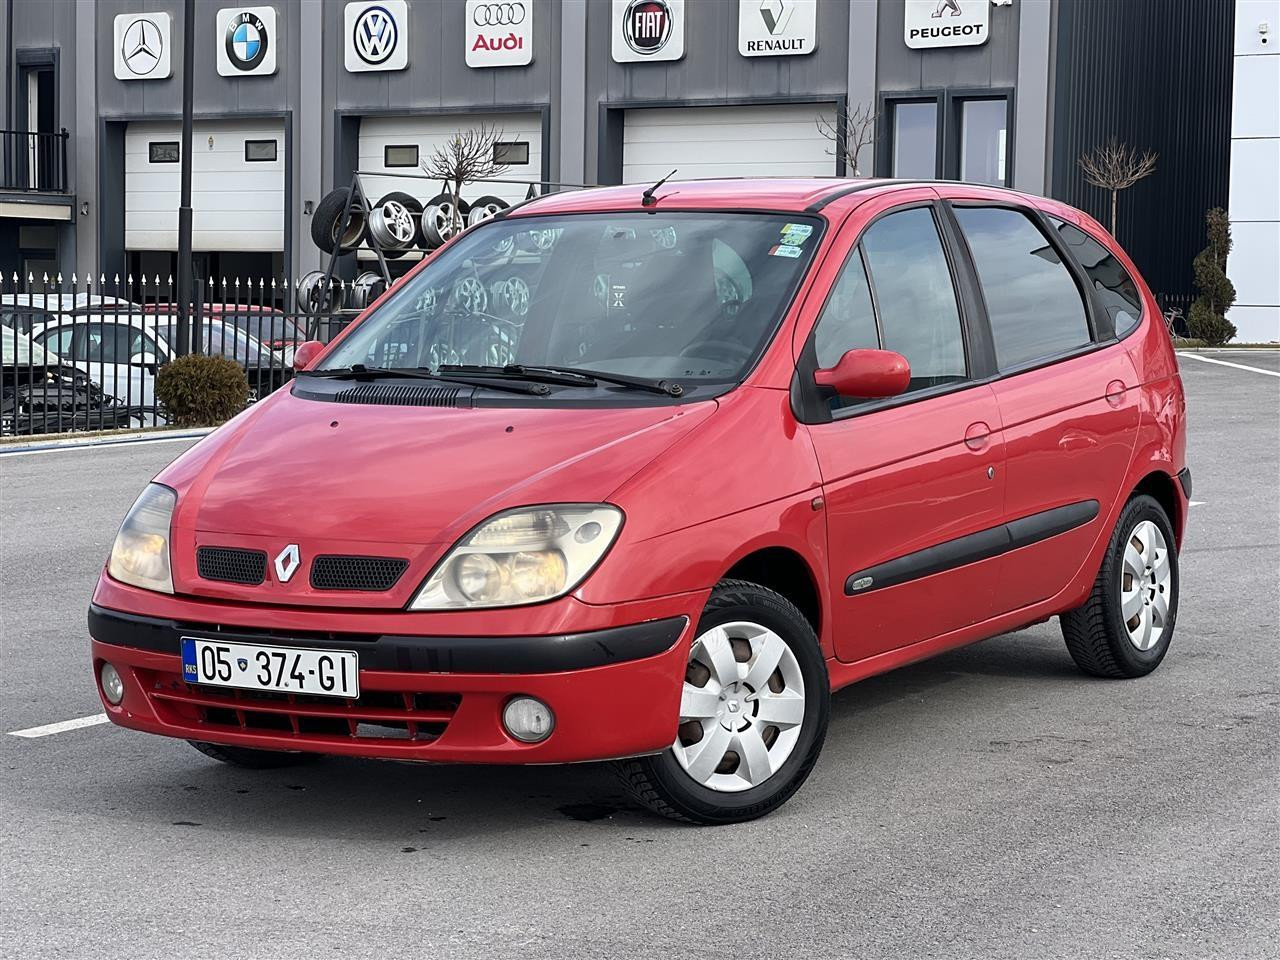 Renault scenic 1.9 dci KLIMATRONIK 2003 rks 10 muaj